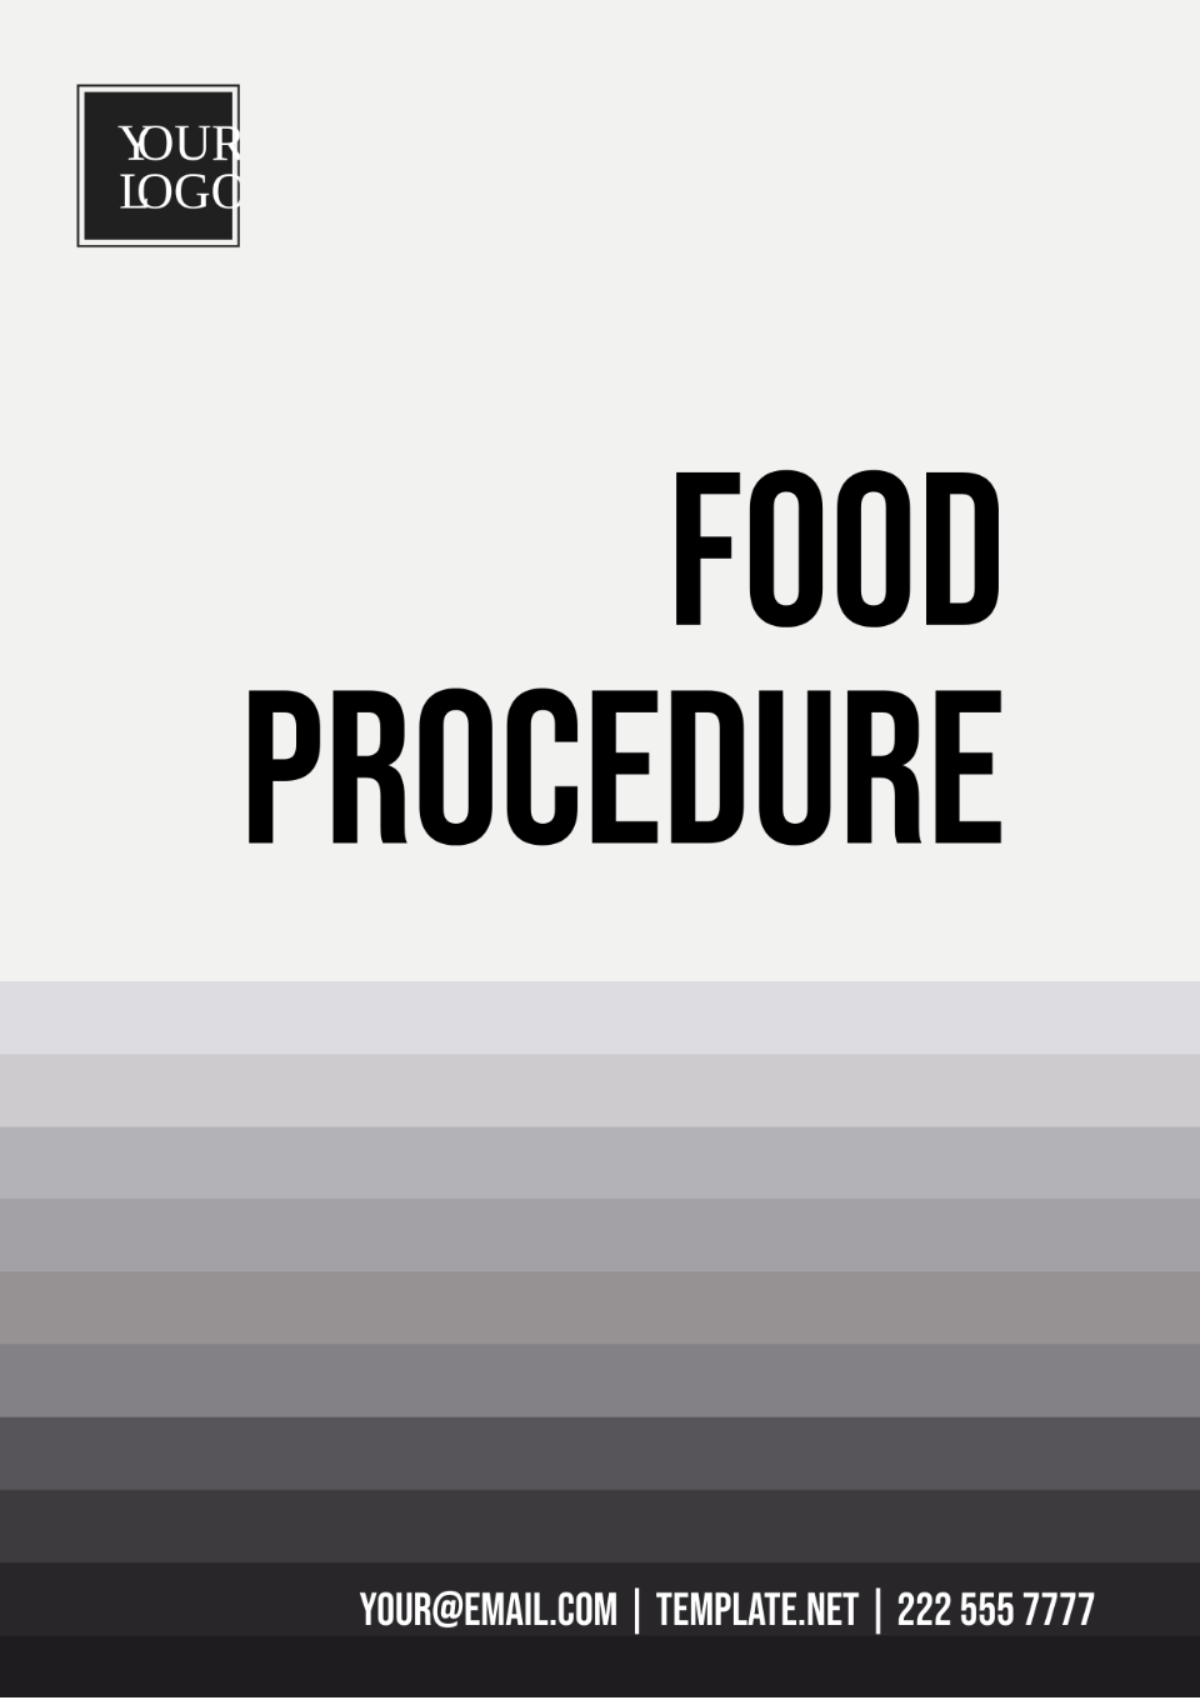 Free Food Procedure Template